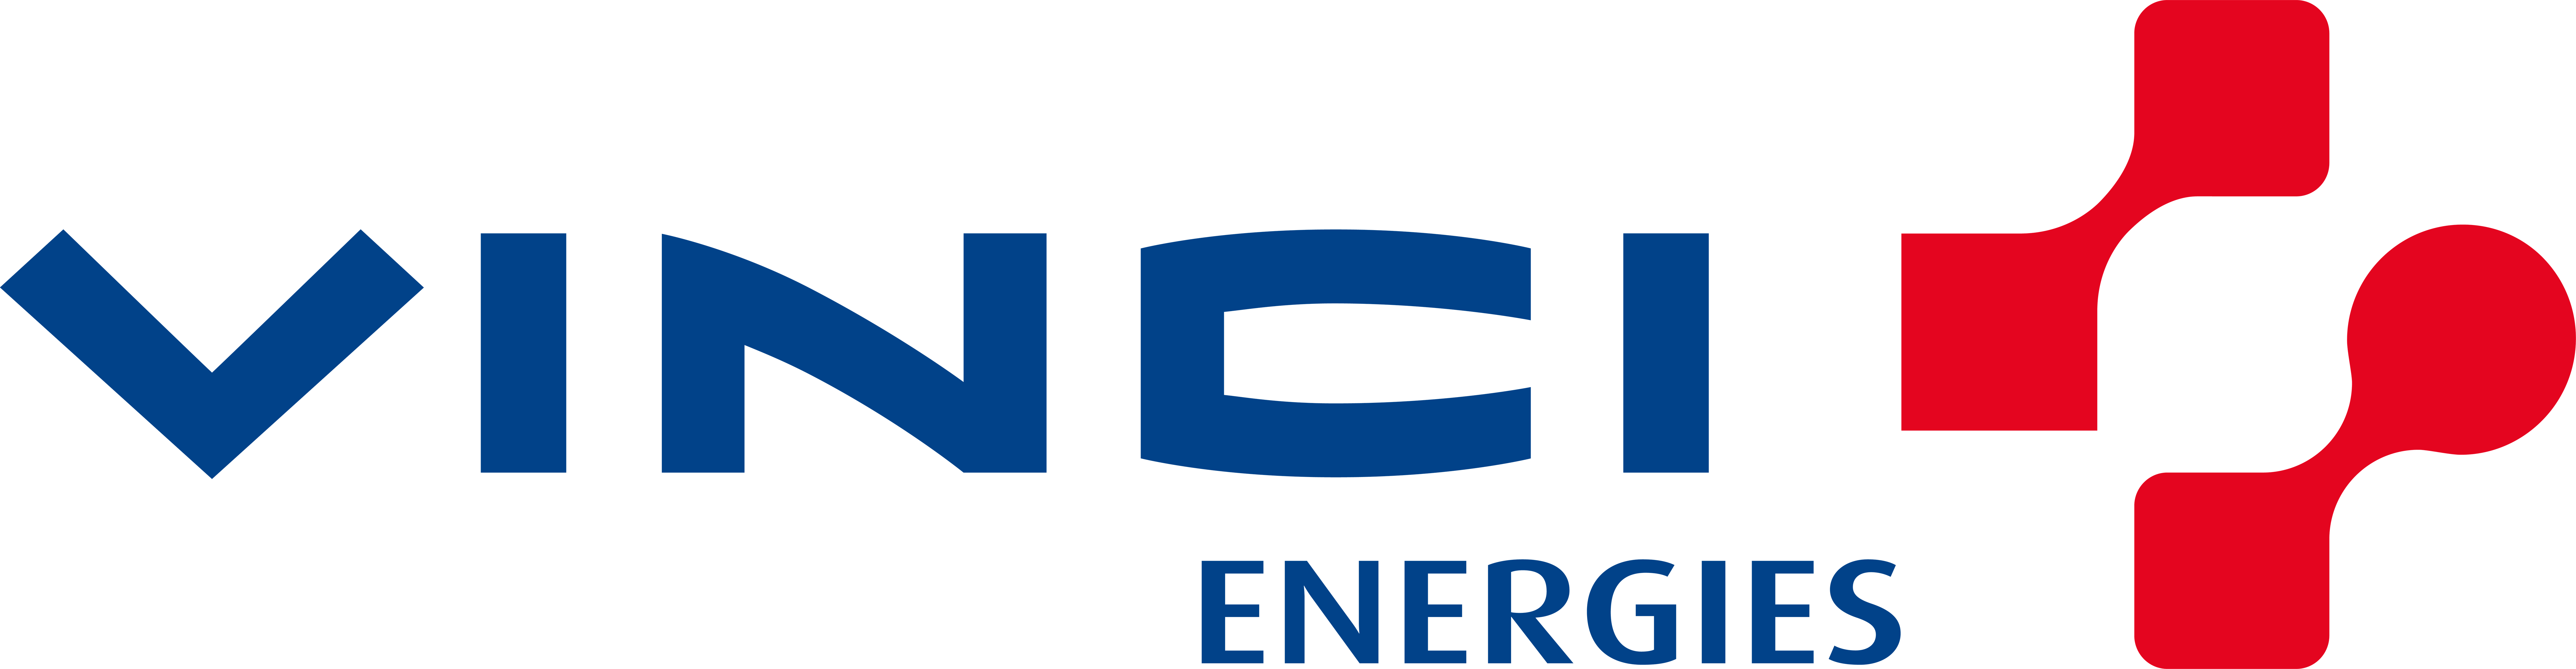 Logo Vinci Energies - Systèmes d'information